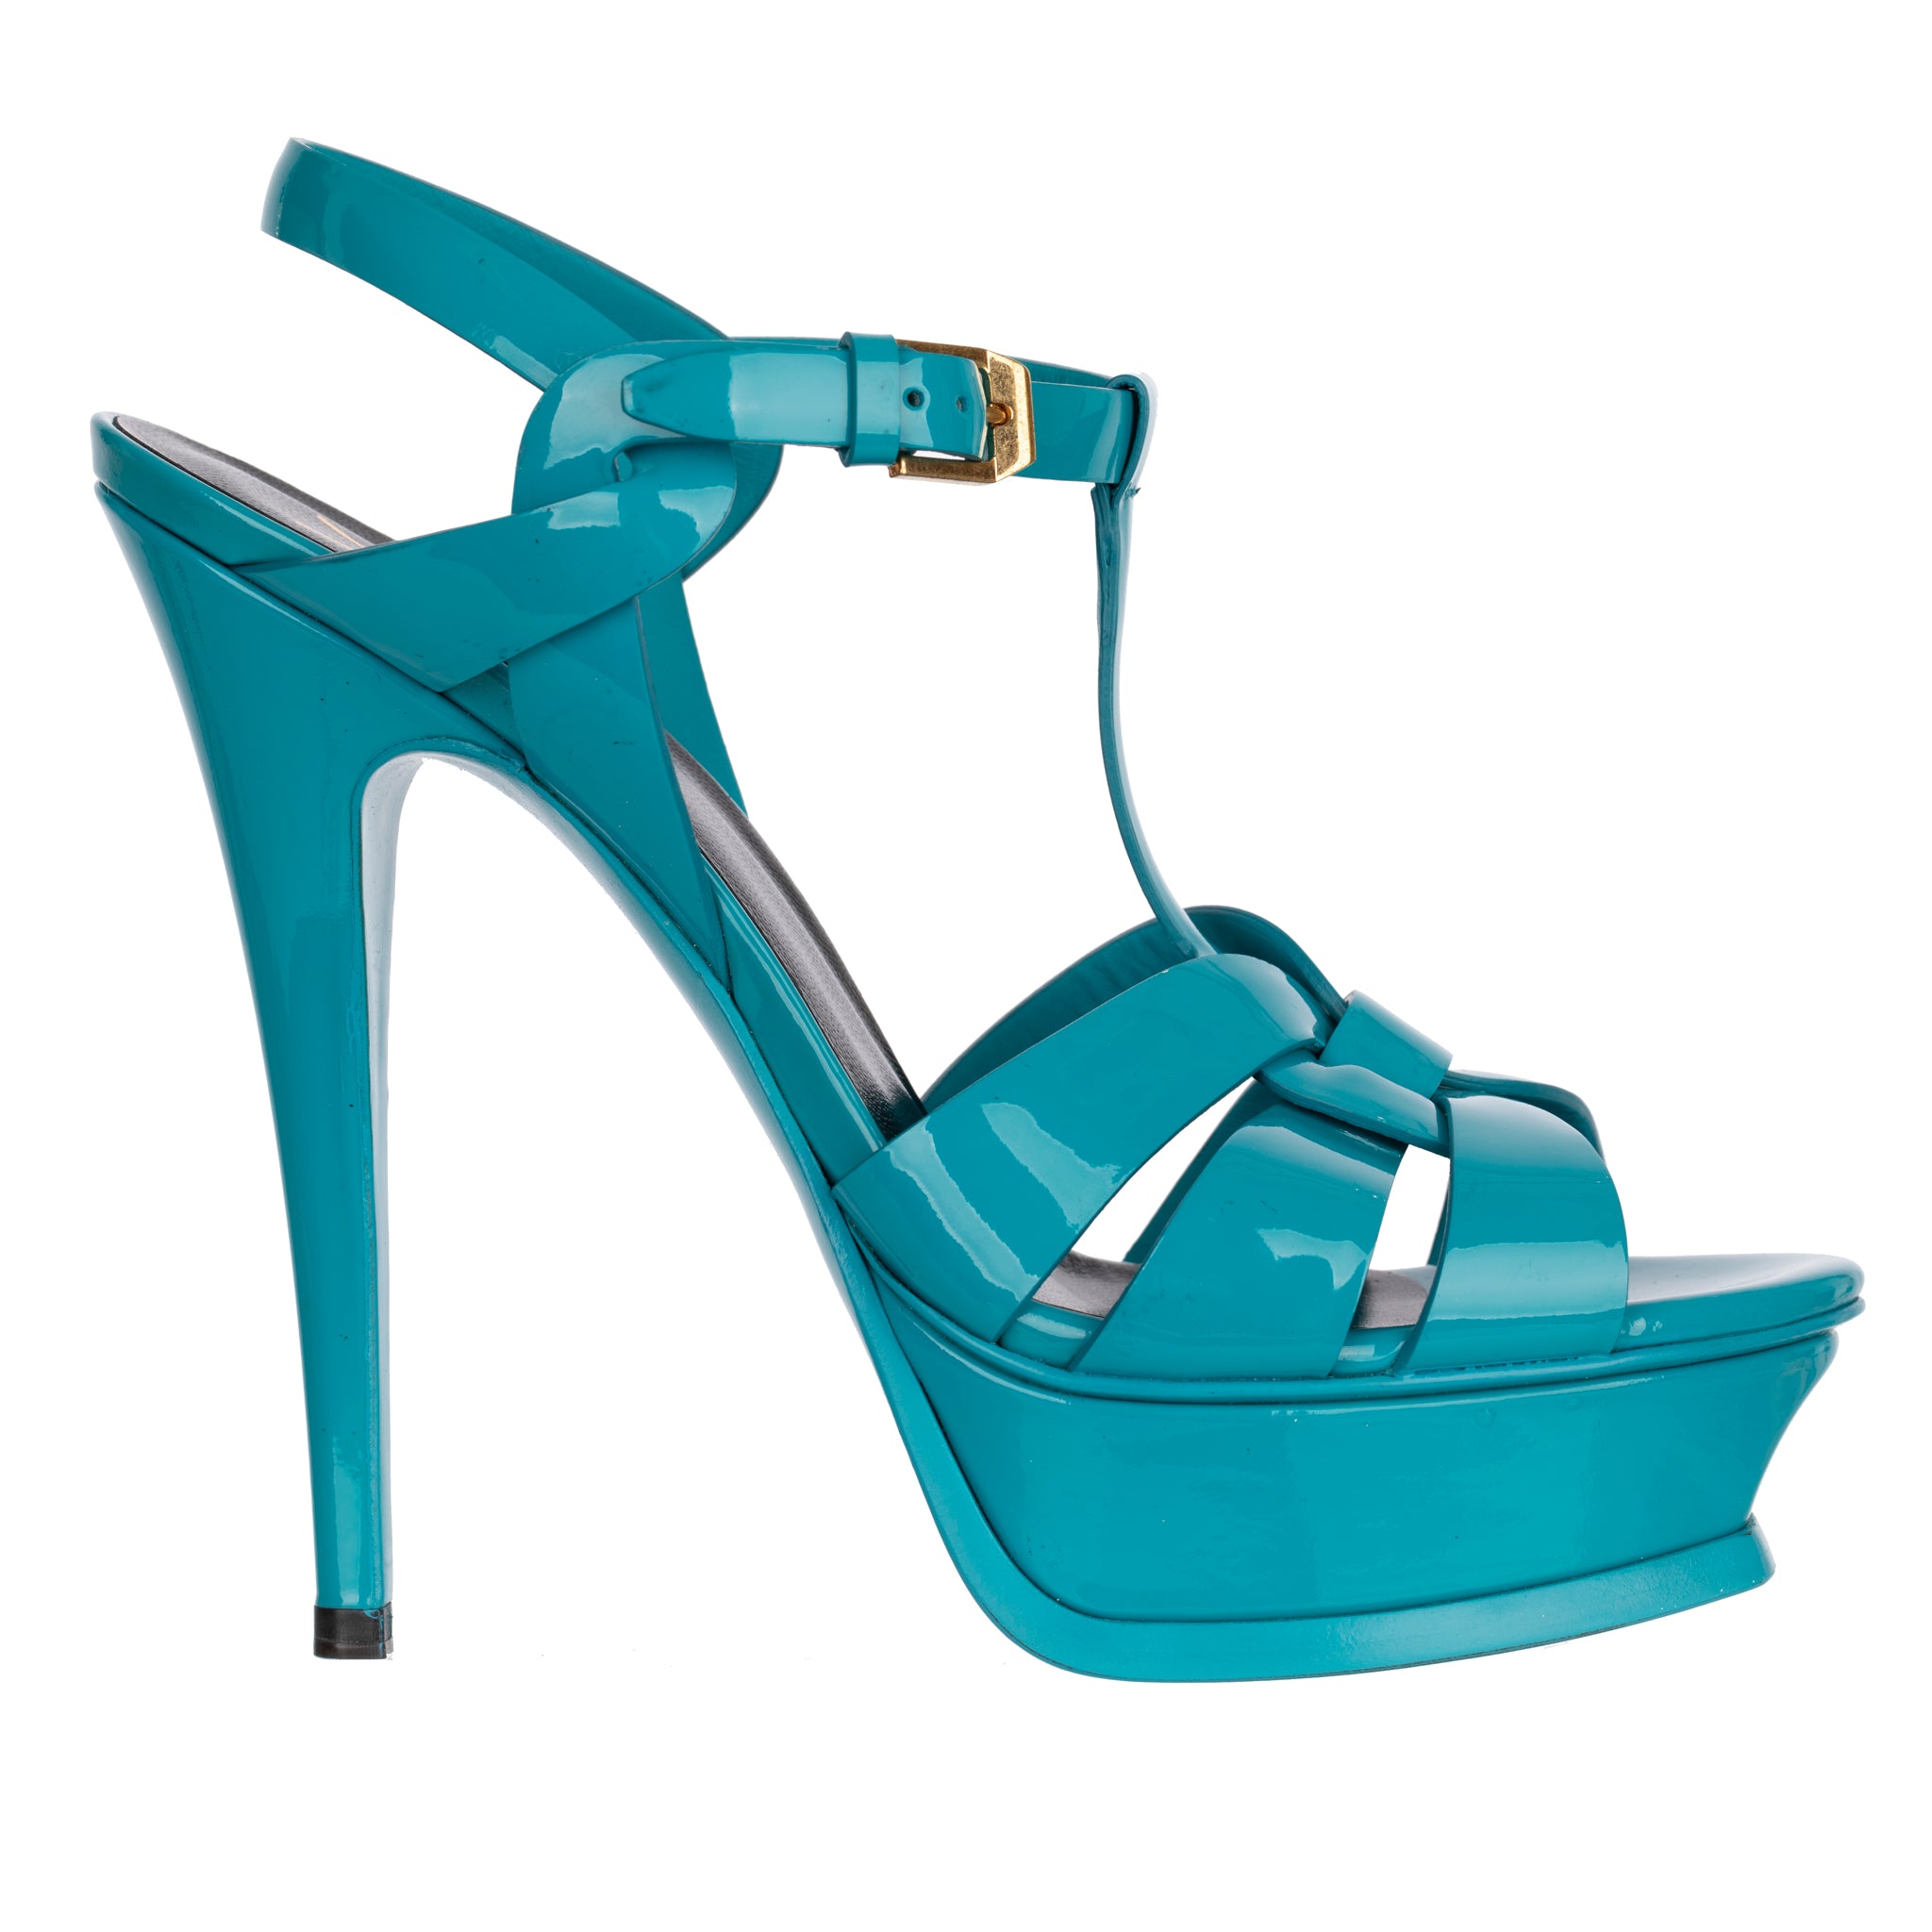 Yves Saint Laurent Turquoise Patent Leather Tribute Platform Sandals 37 FR